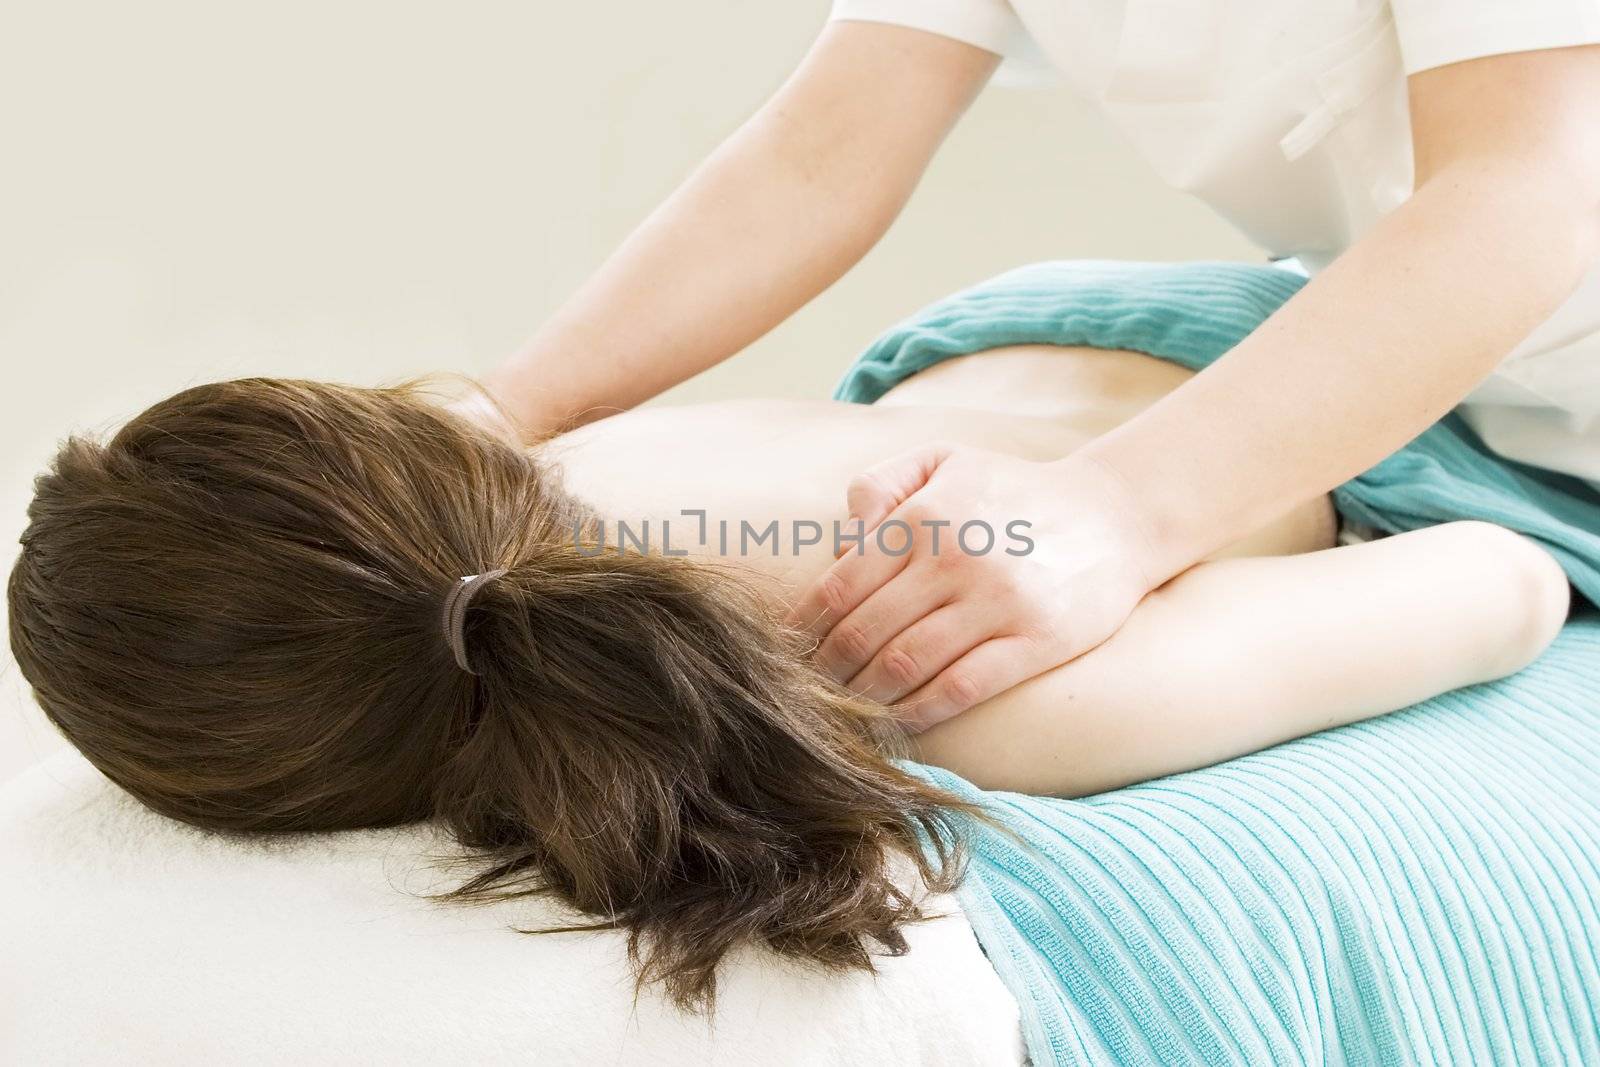 Shoulder massage detail at a beauty spa.